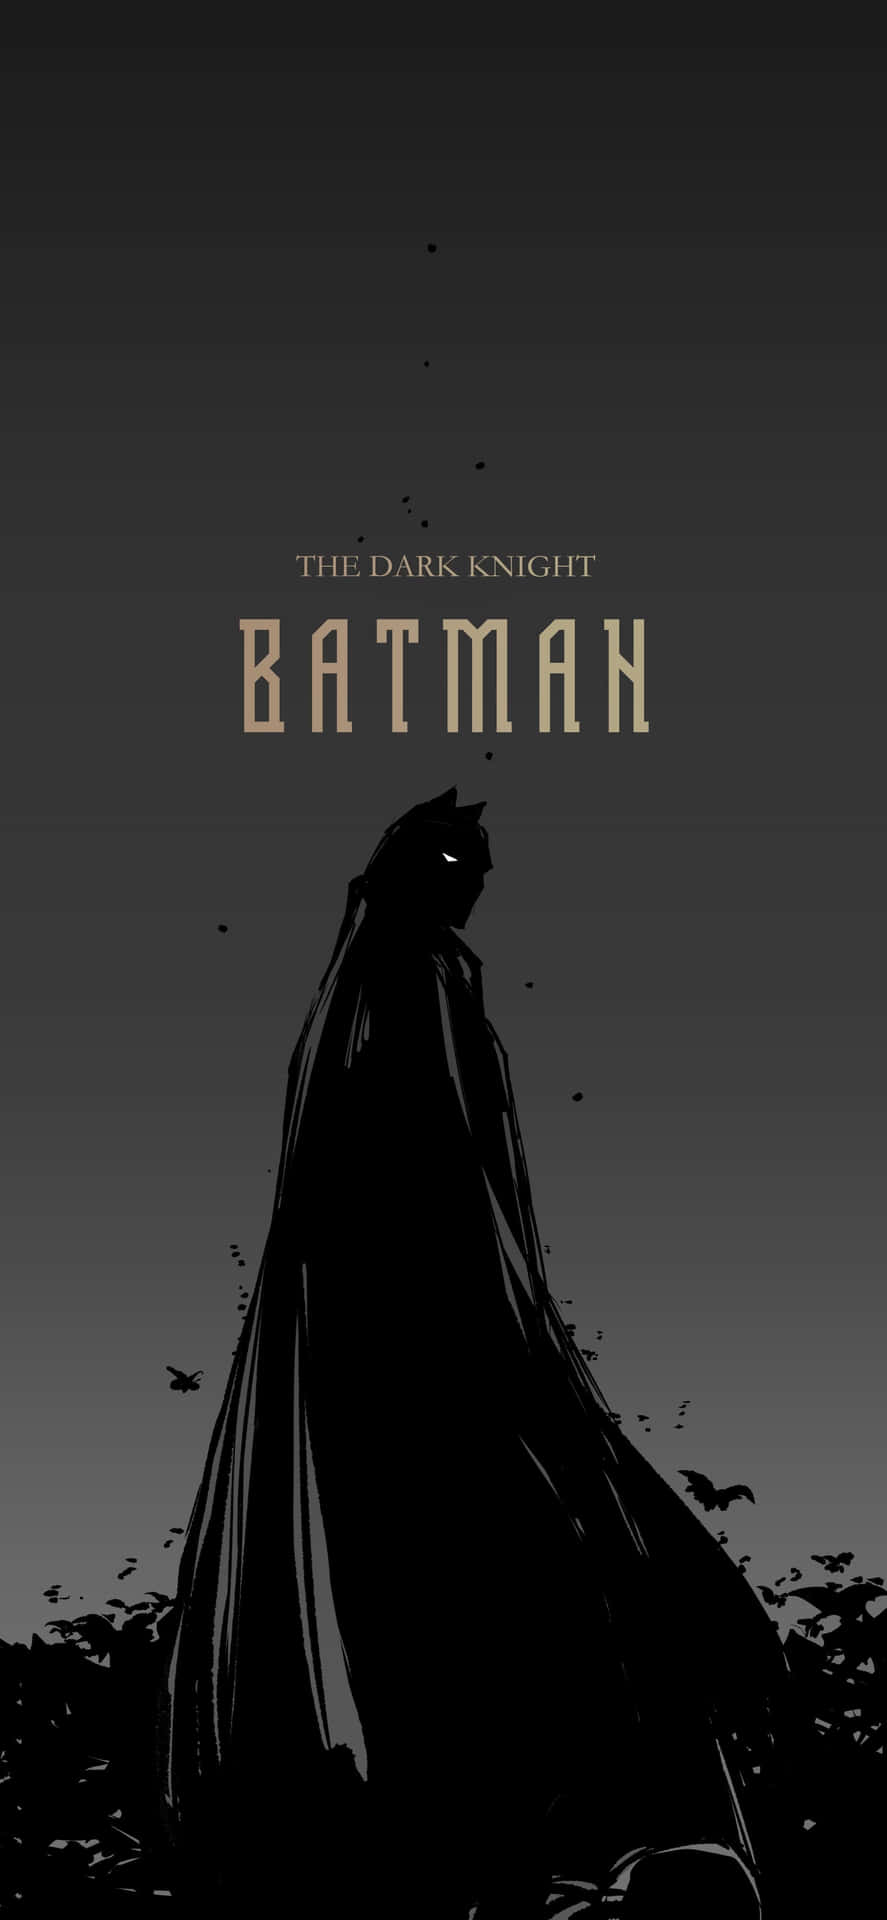 The Dark Knight Hintergrundbild 887x1920. Free Batman Aesthetic Wallpaper Downloads, Batman Aesthetic Wallpaper for FREE